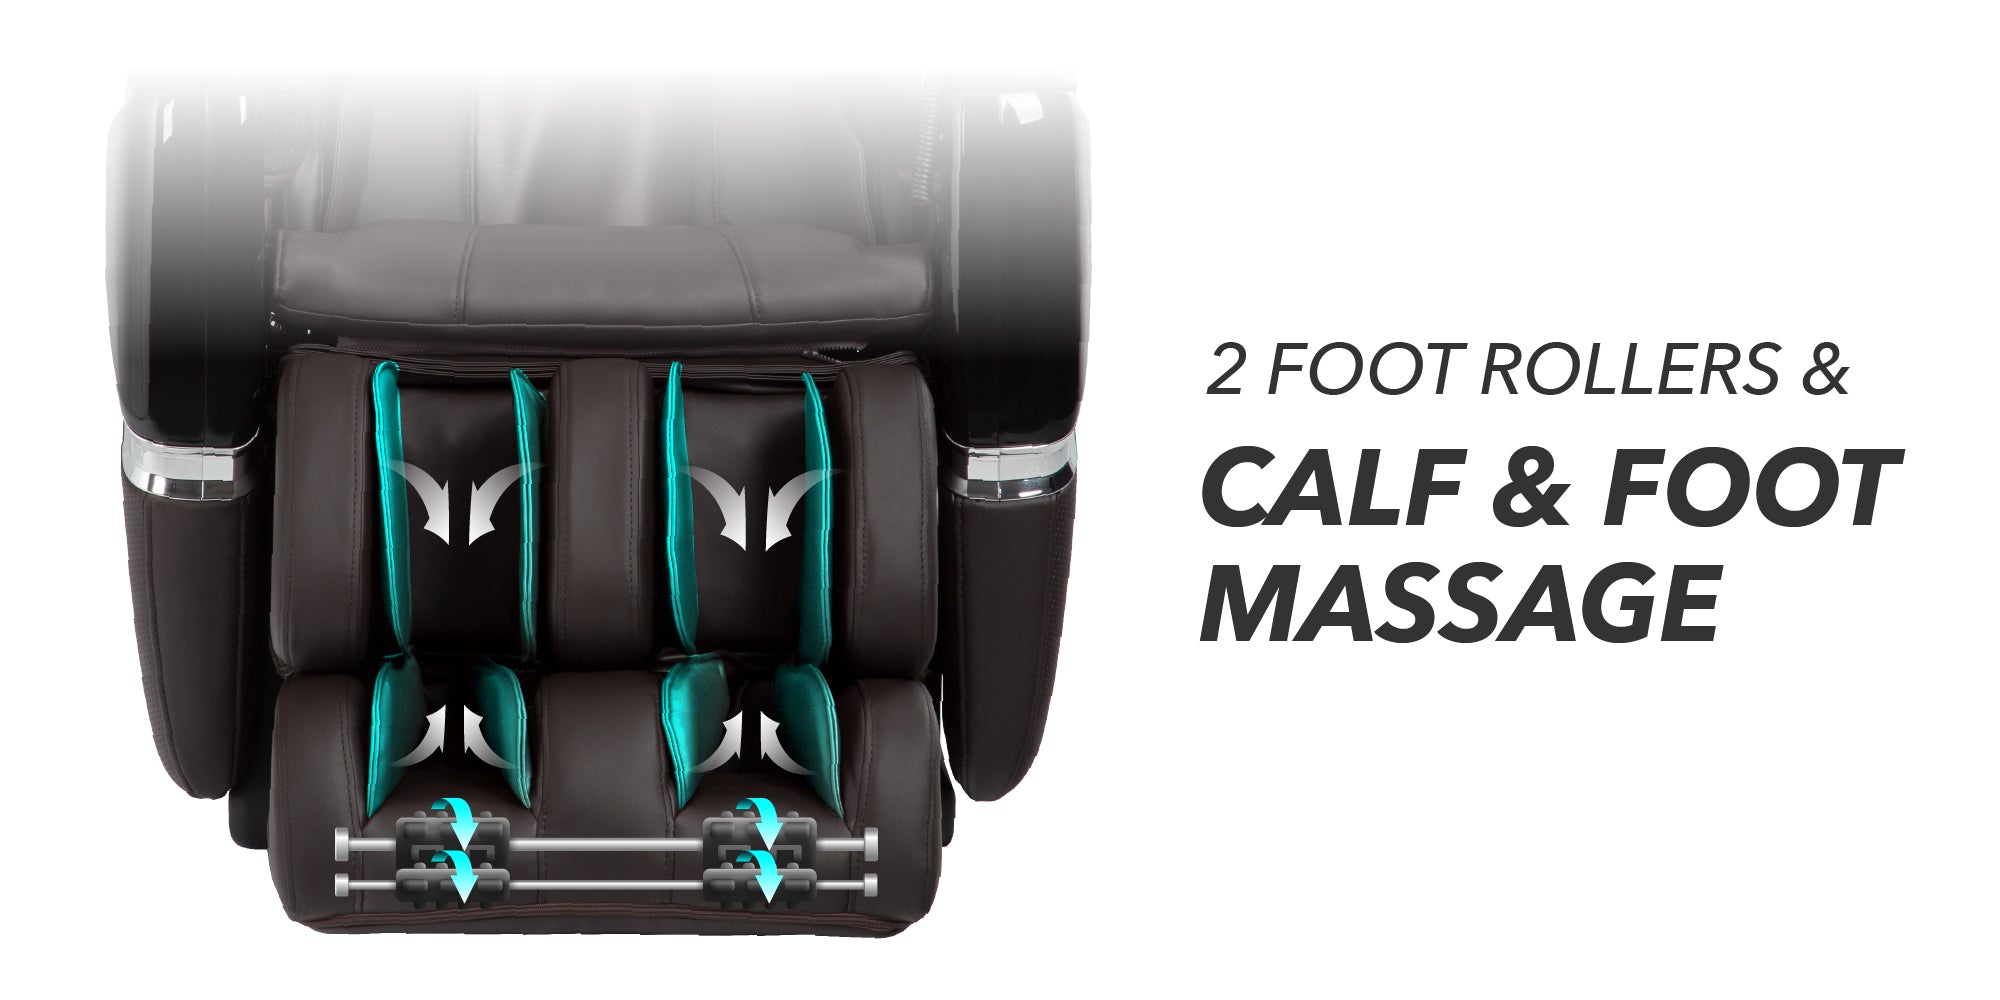 2 Foot Rollers, Calf & Foot Massage